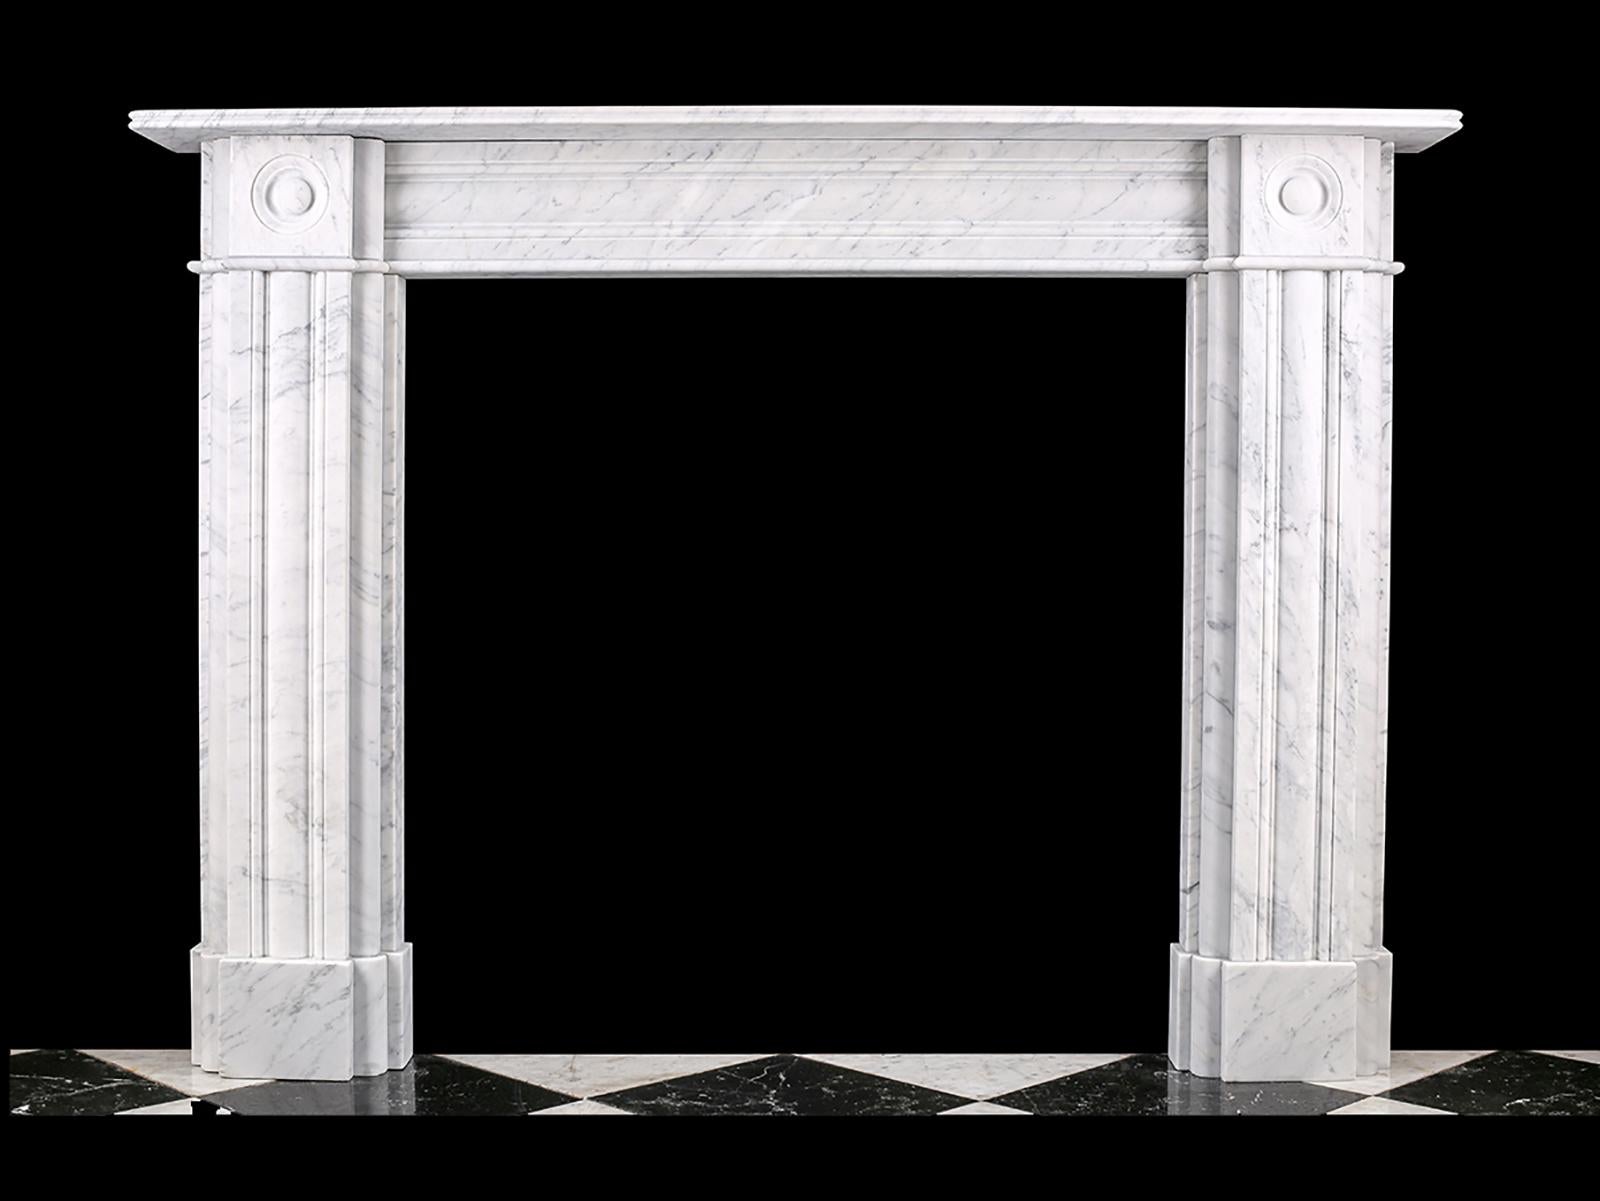 Large Double-Slip Georgian Style Fireplace Surround in finest quality Italian Carrara Marble.

Size: Depth: 8” – 20.3 cm
External Height: 42 3/4” – 108.5 cm
External Width: 58” – 147 cm
Internal Height: 36” – 91.5 cm
Internal Width: 36” – 91.5